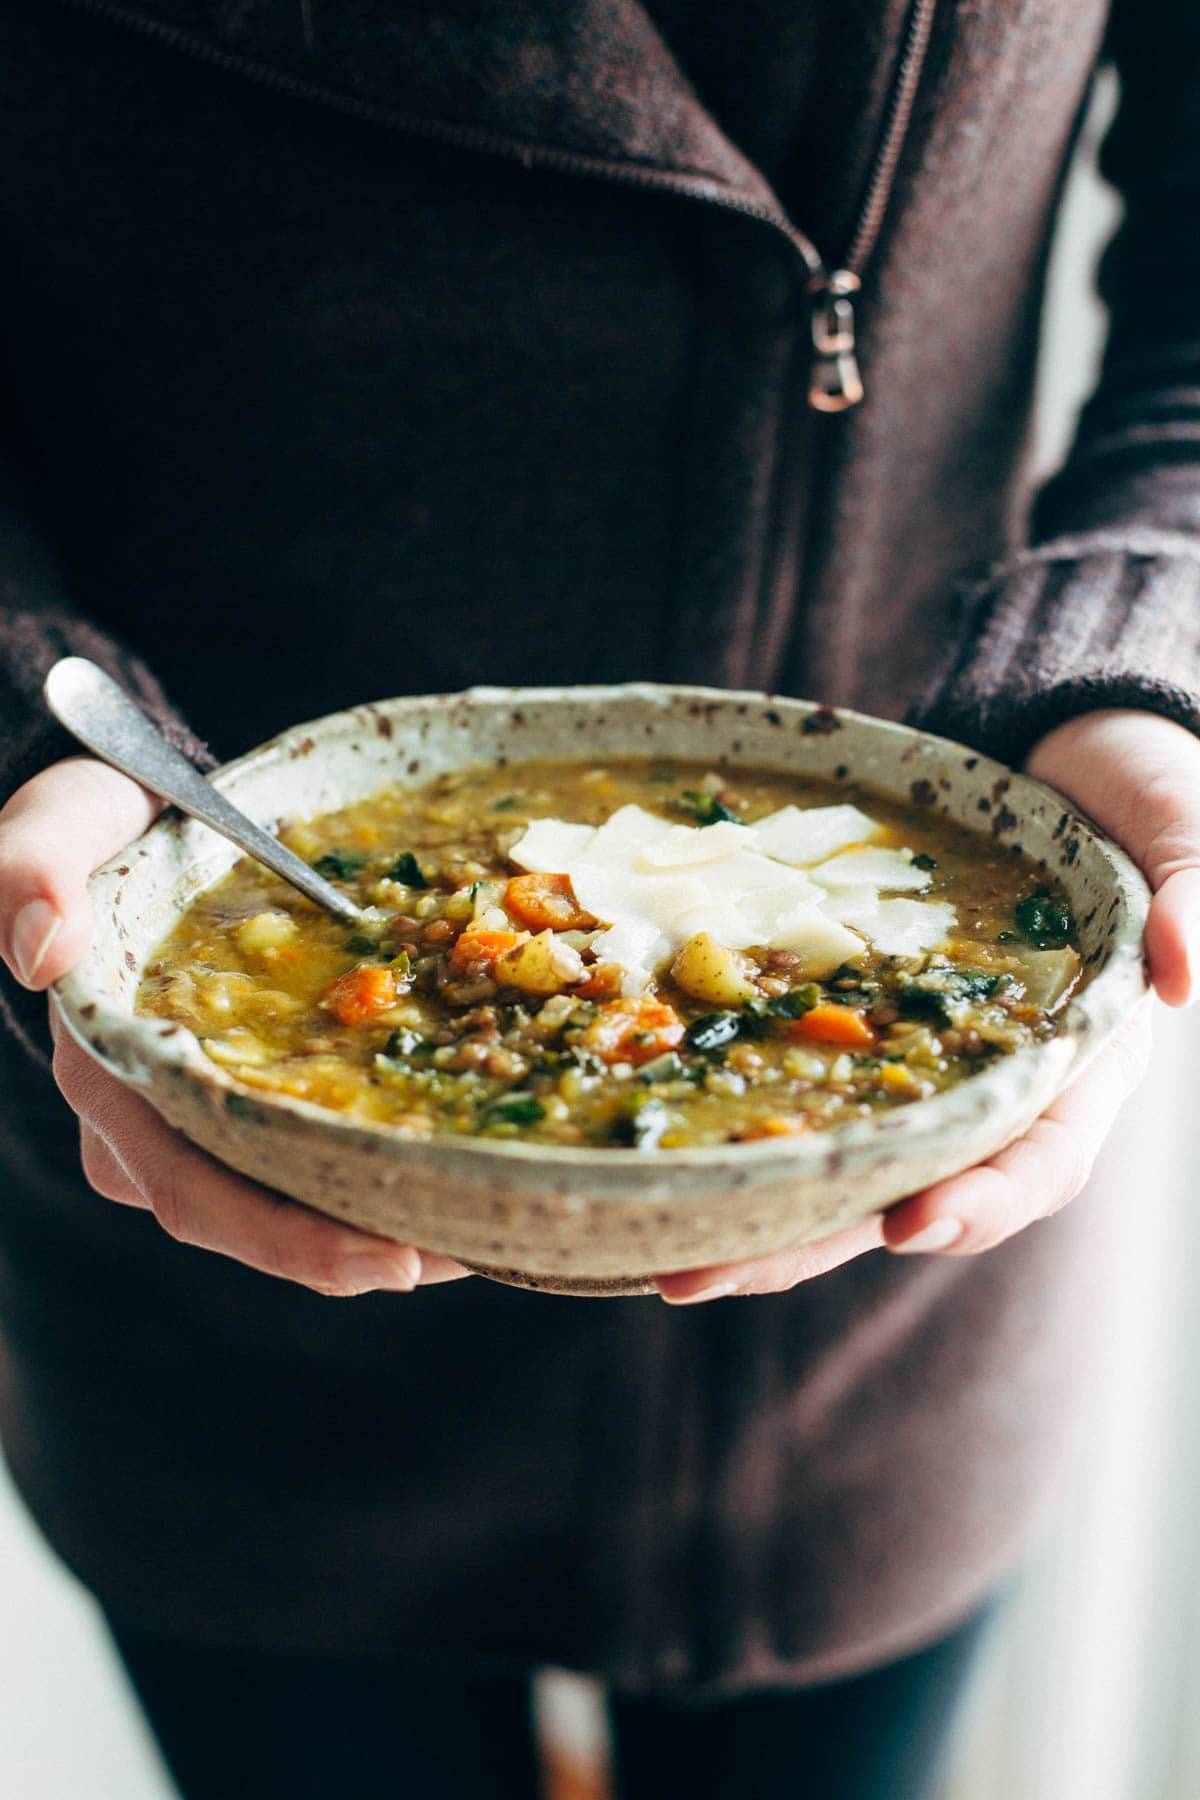 White hands holding a bowl of lentil soup